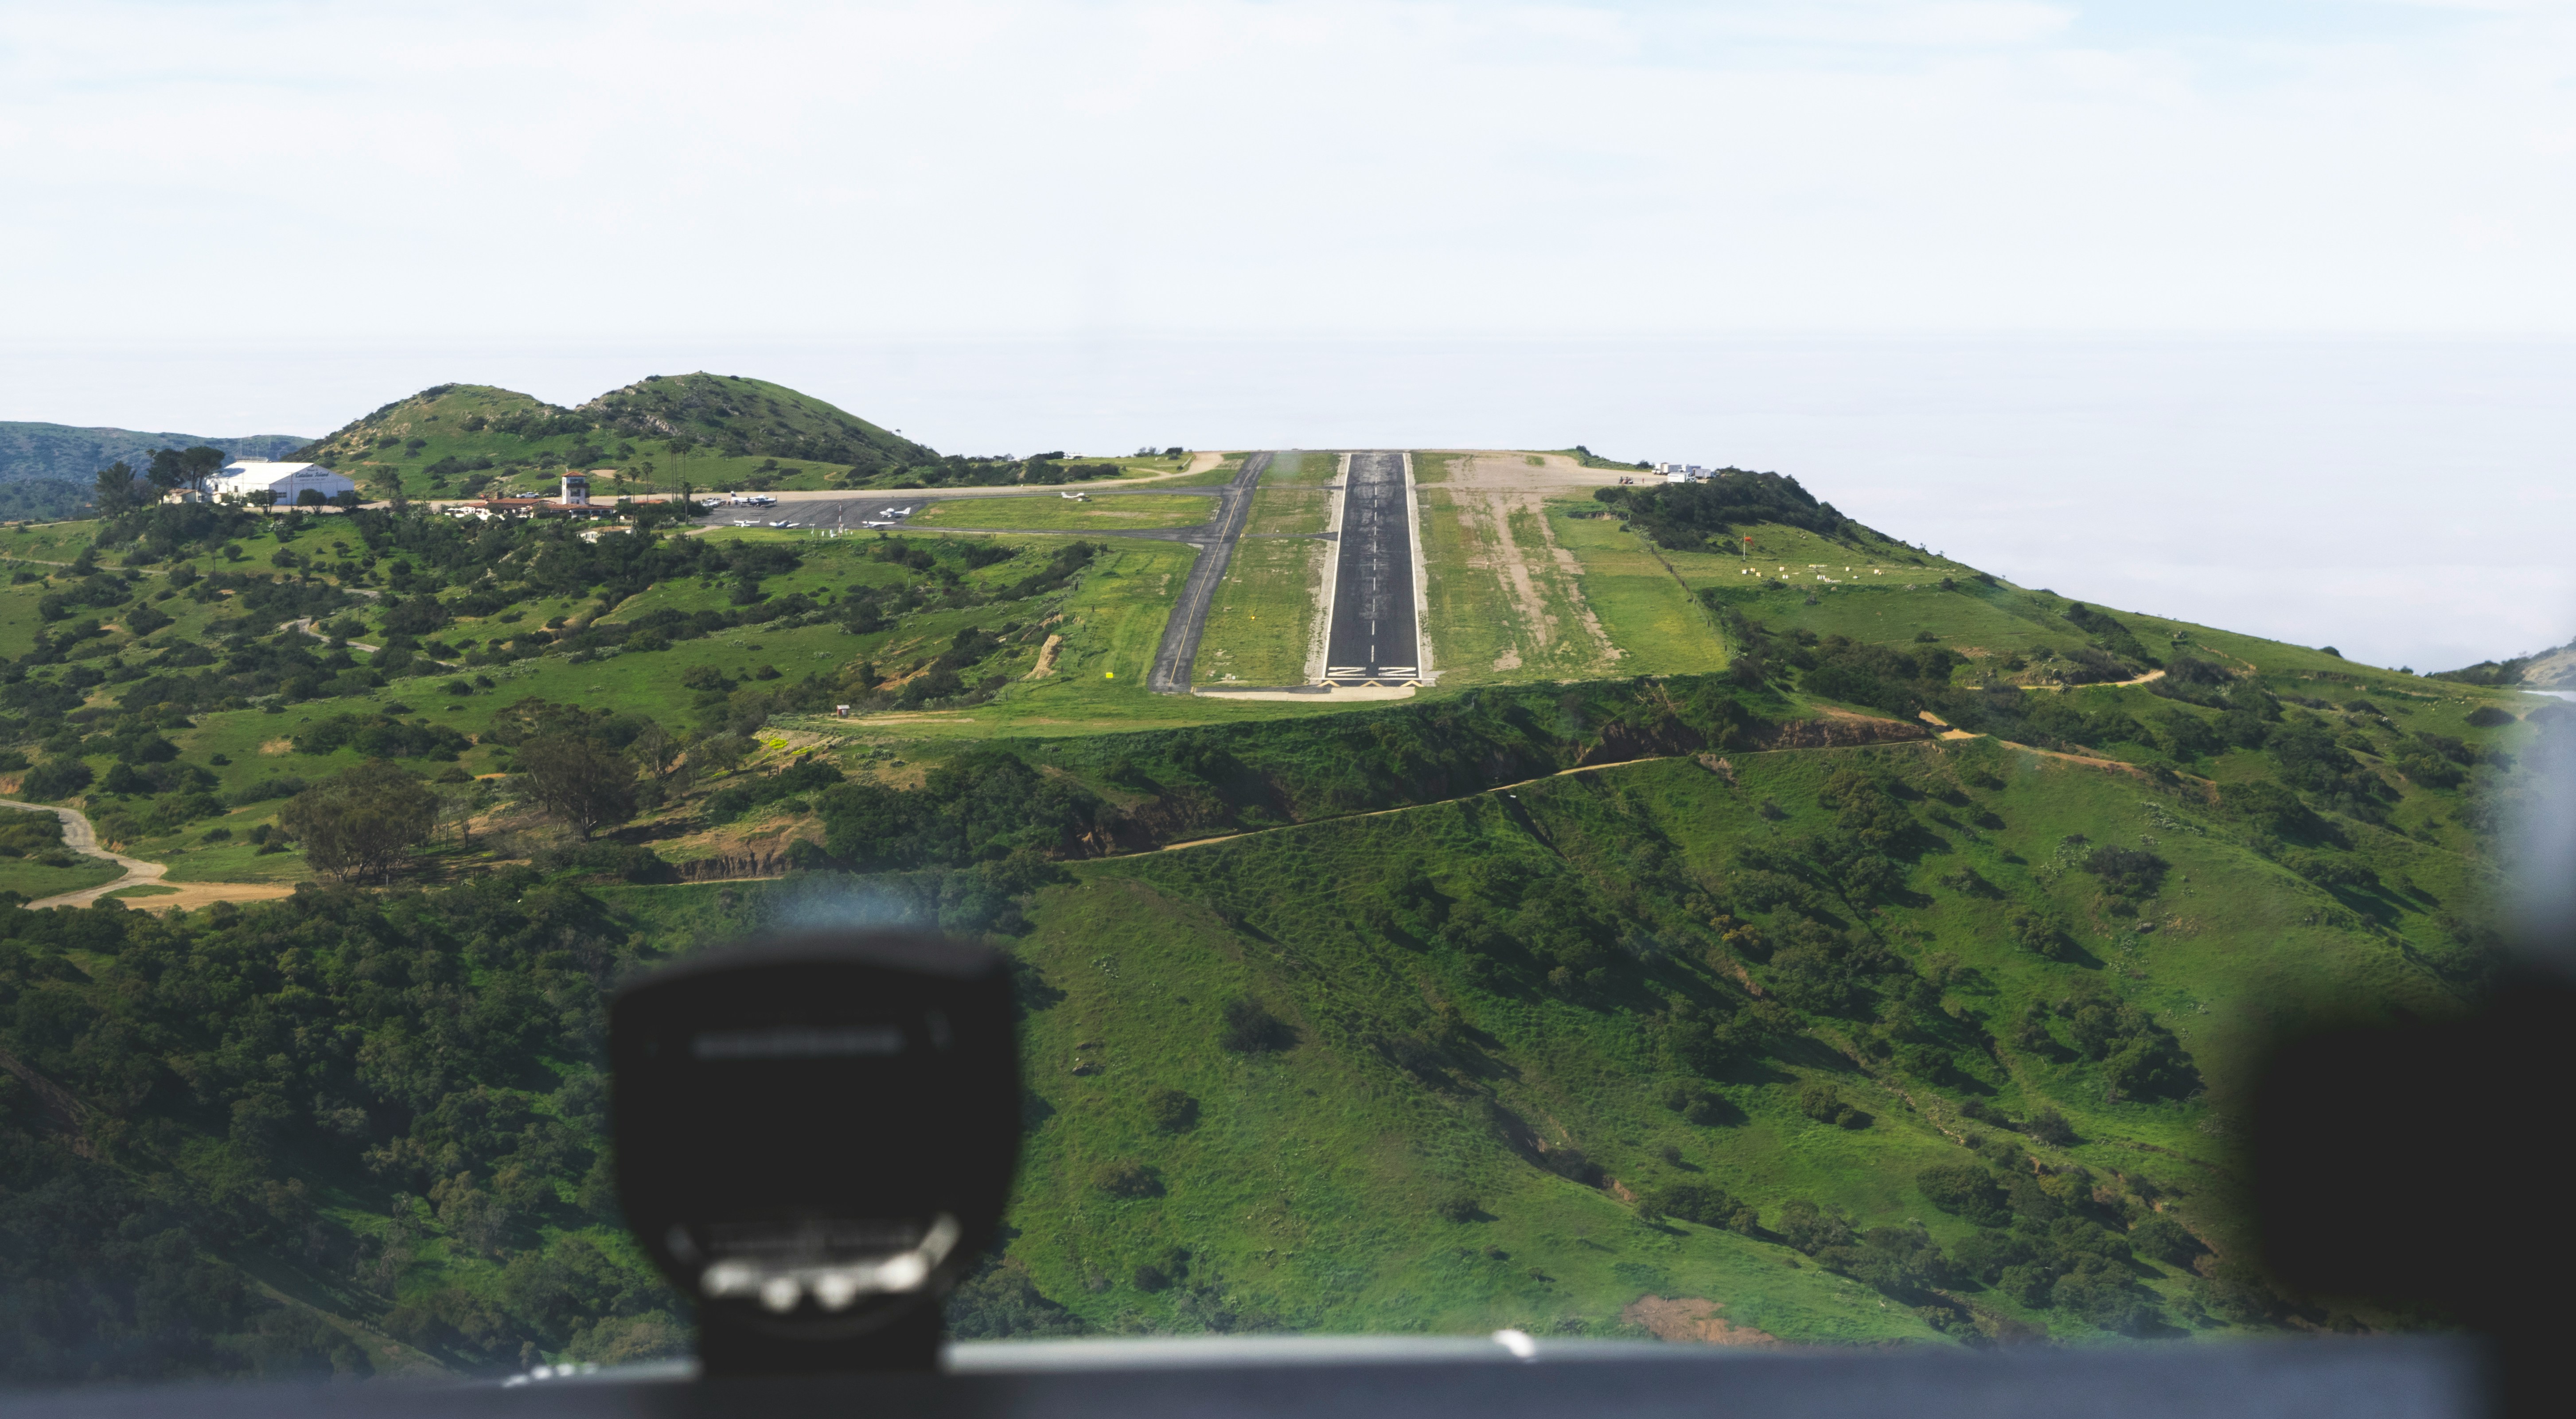 Approach into a remote air strip